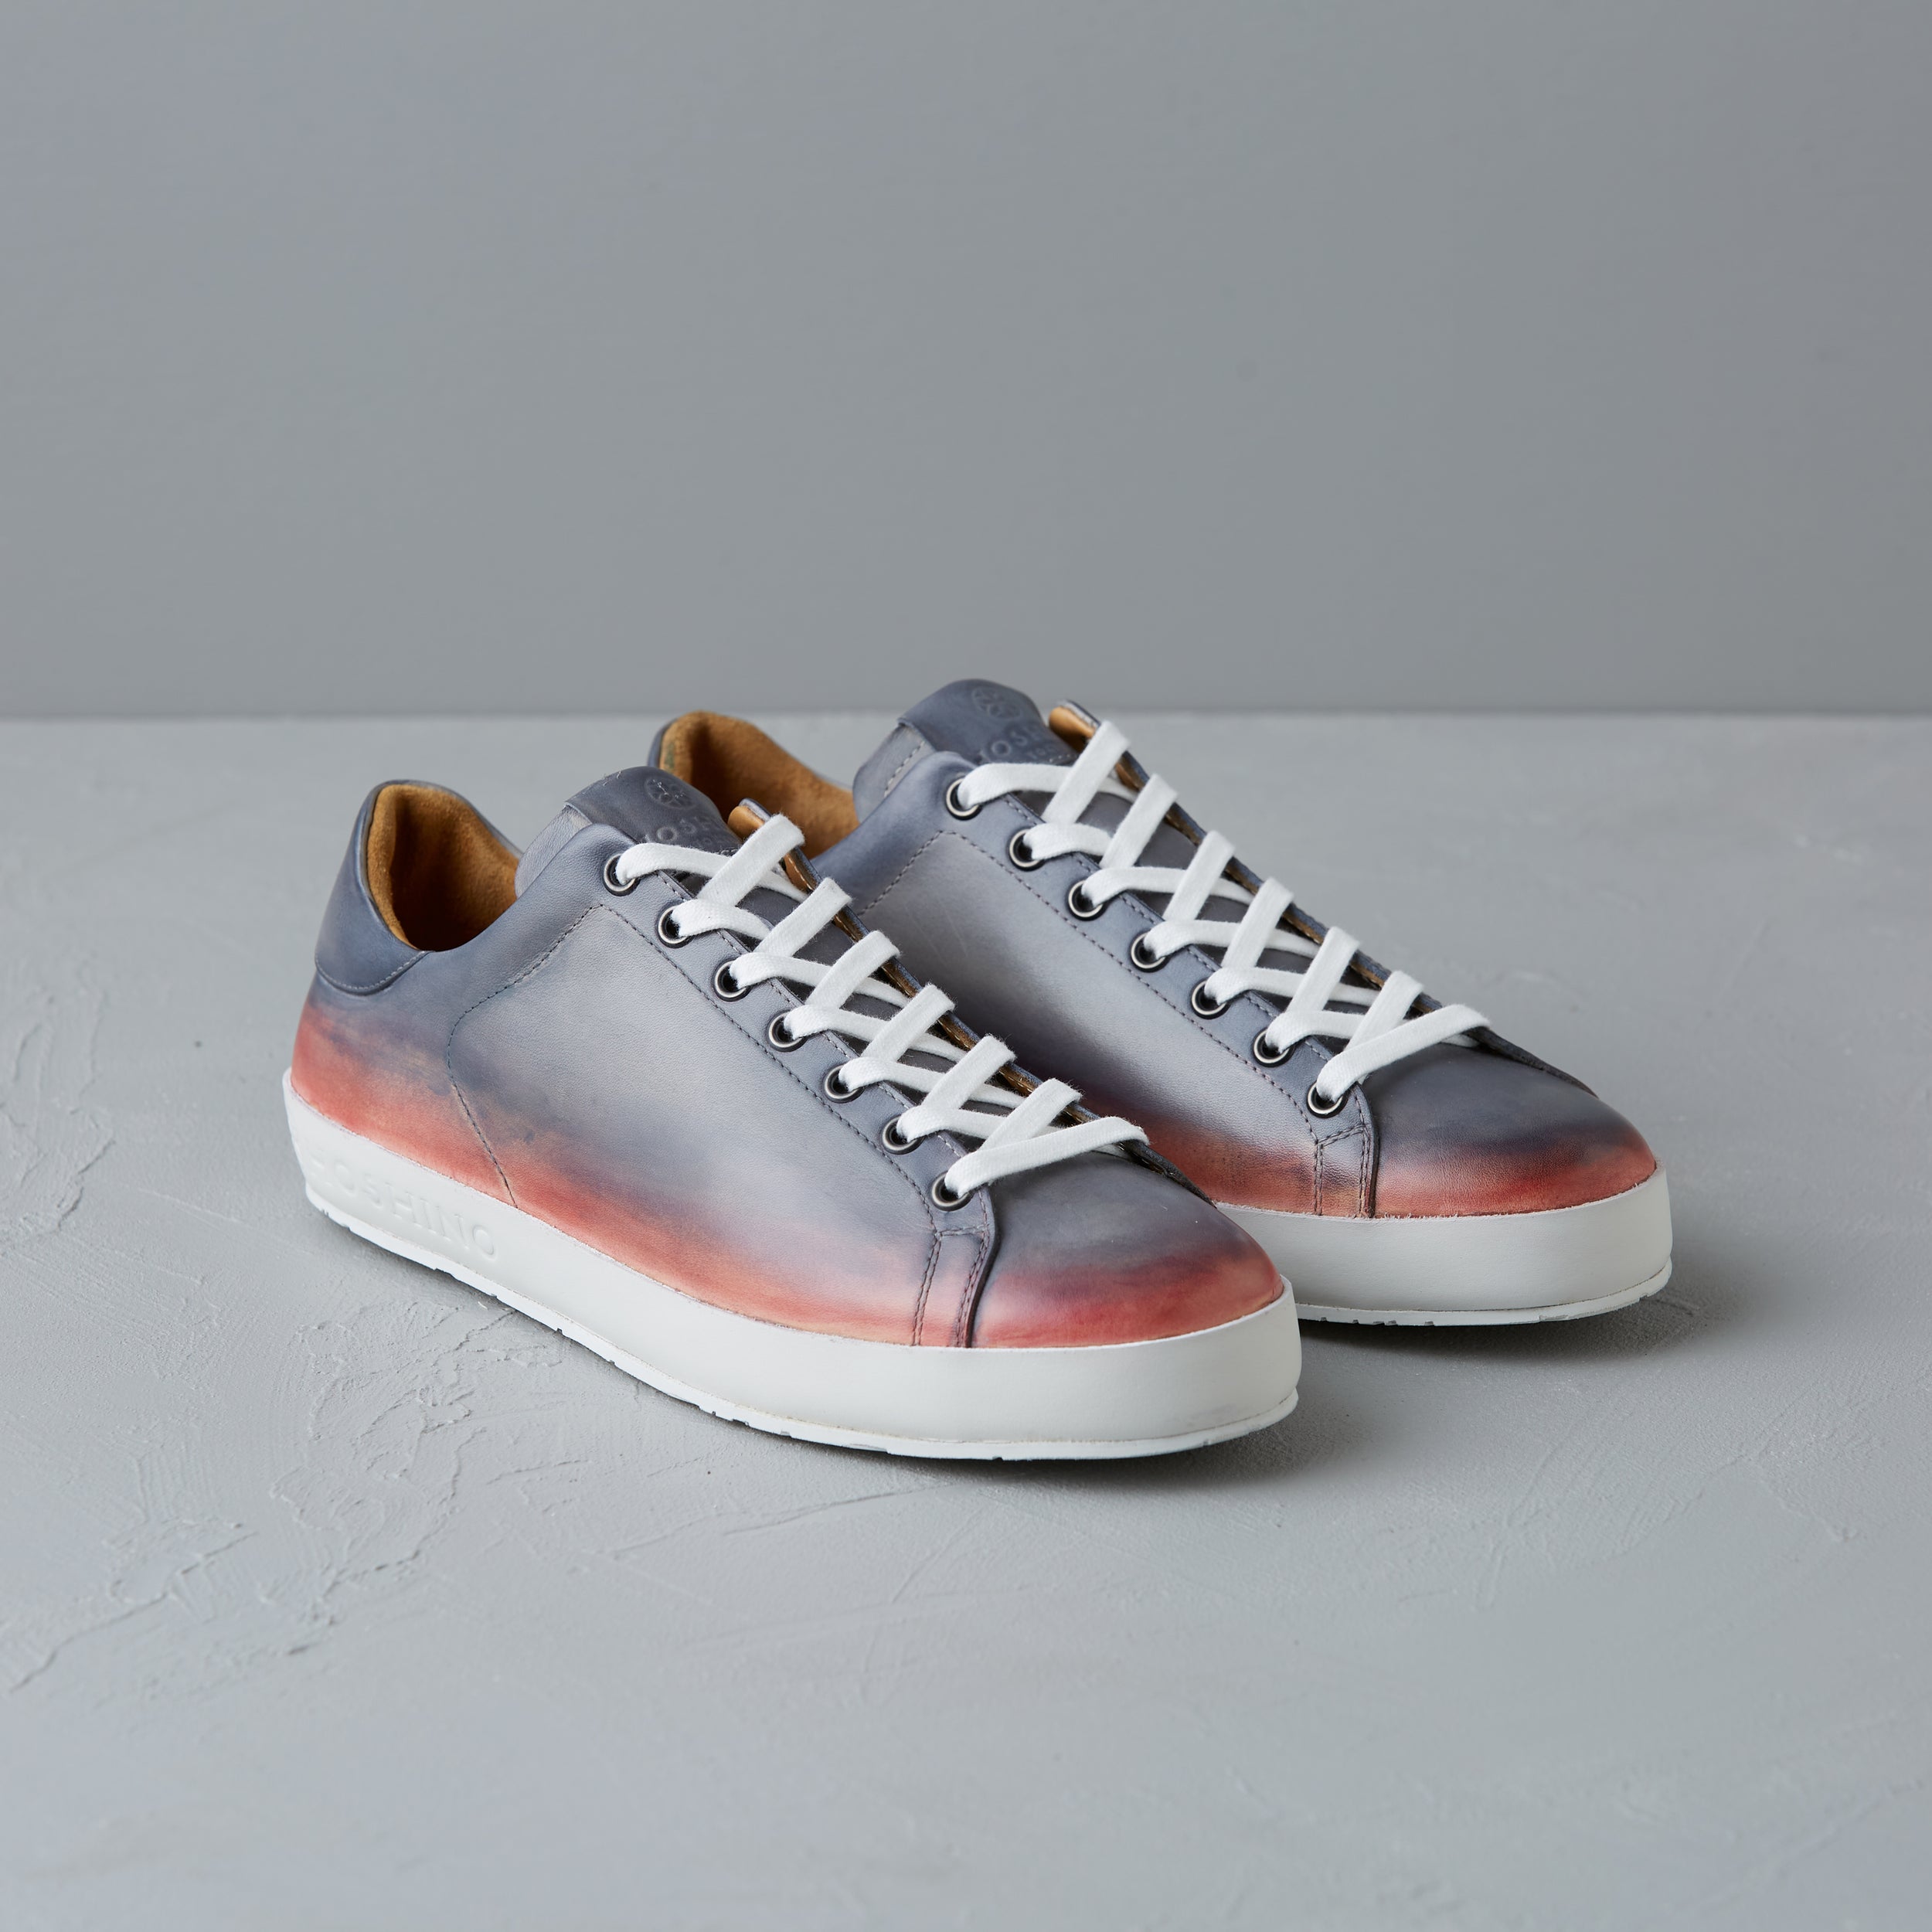 [women's] Liberte - low-top sneakers - gray x pink patina calfskin